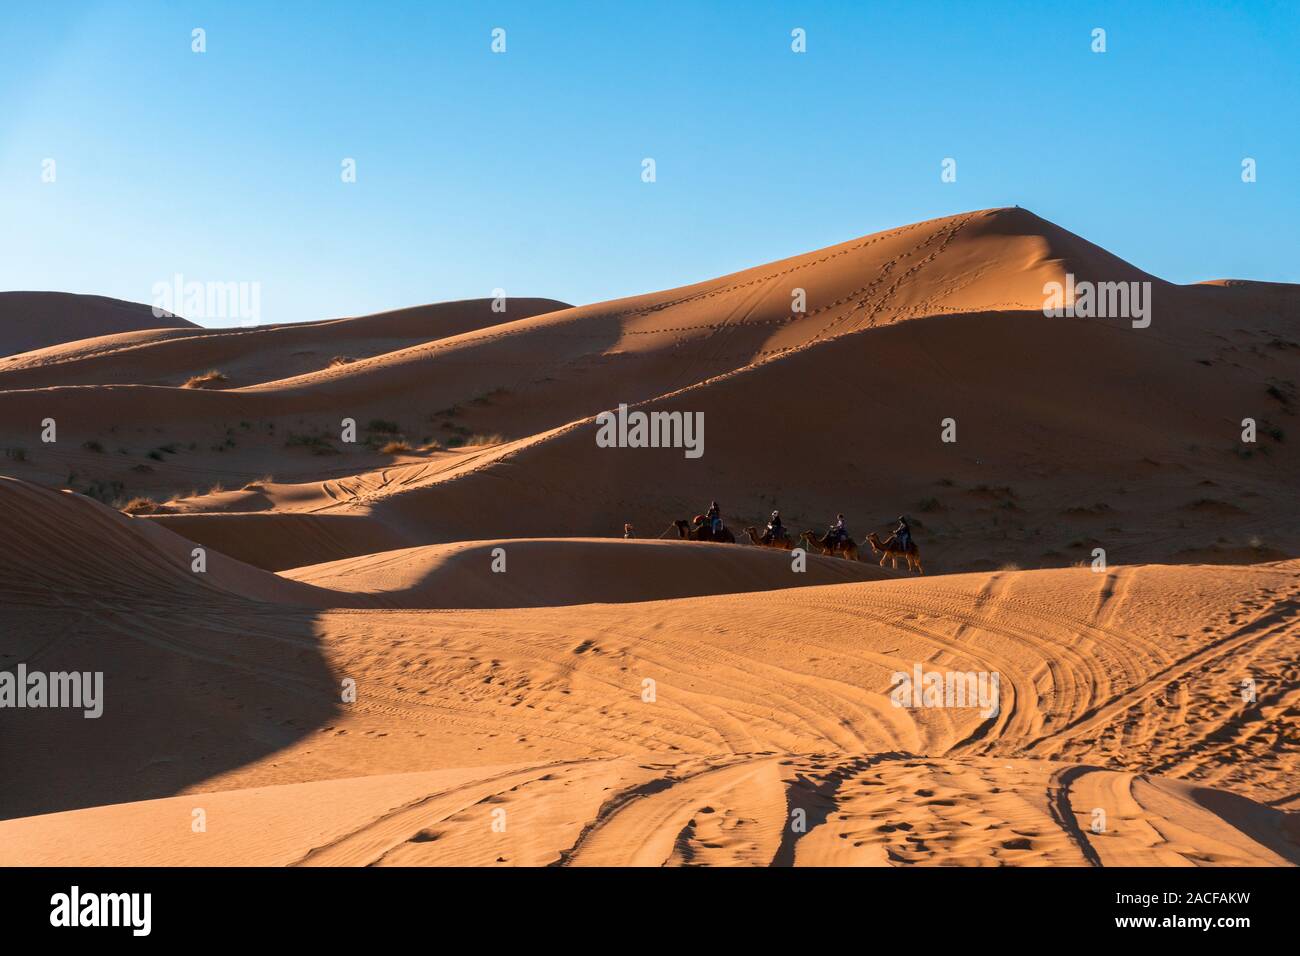 Caravan in Sand dunes of Erg Chebbi in the Sahara Desert, Morocco Stock Photo